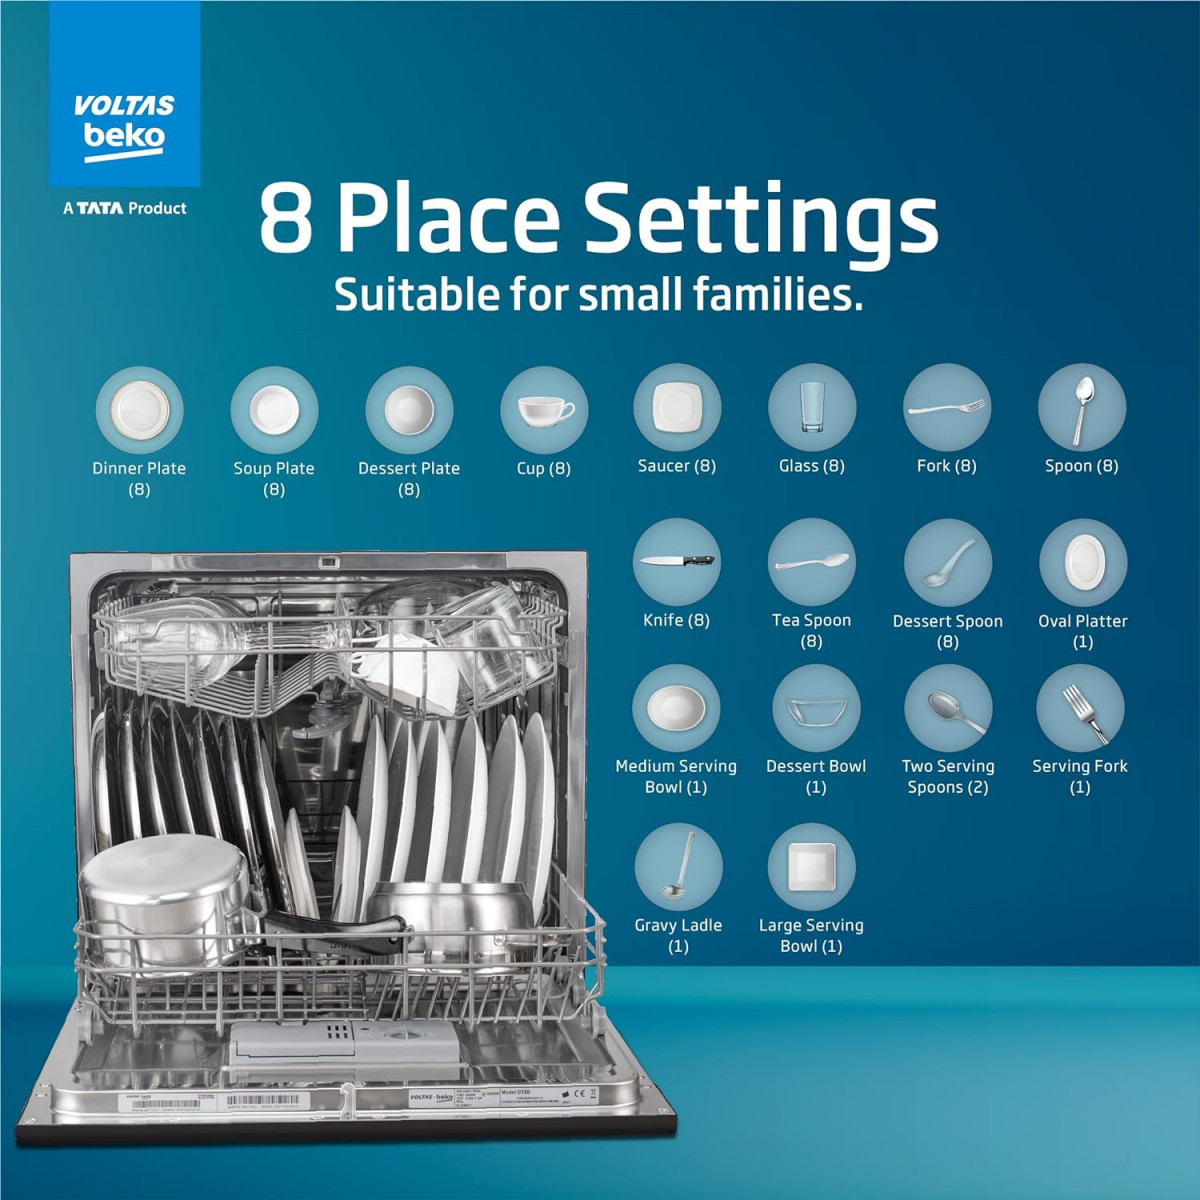 Voltas beko 8 Place Settings Table Top Dishwasher 20202021DT8B Black Inbuilt Heater